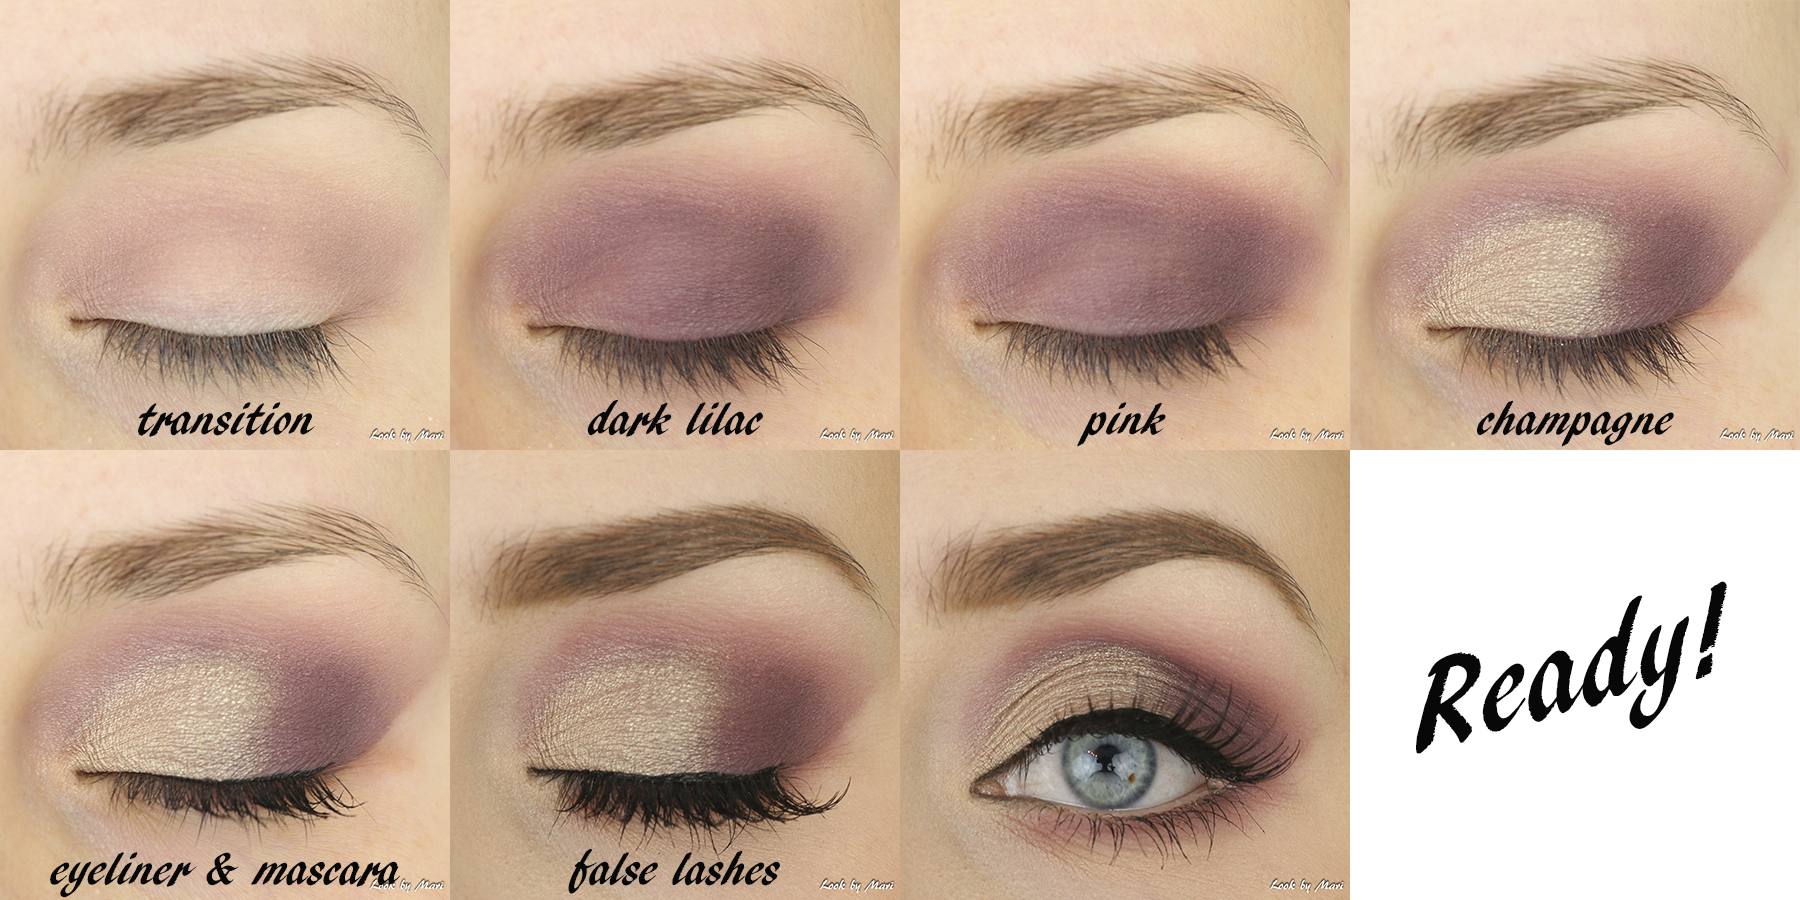 4 morphe brushes 35P eyeshadow palette inspiration review inspo eye makeup tutorial blog